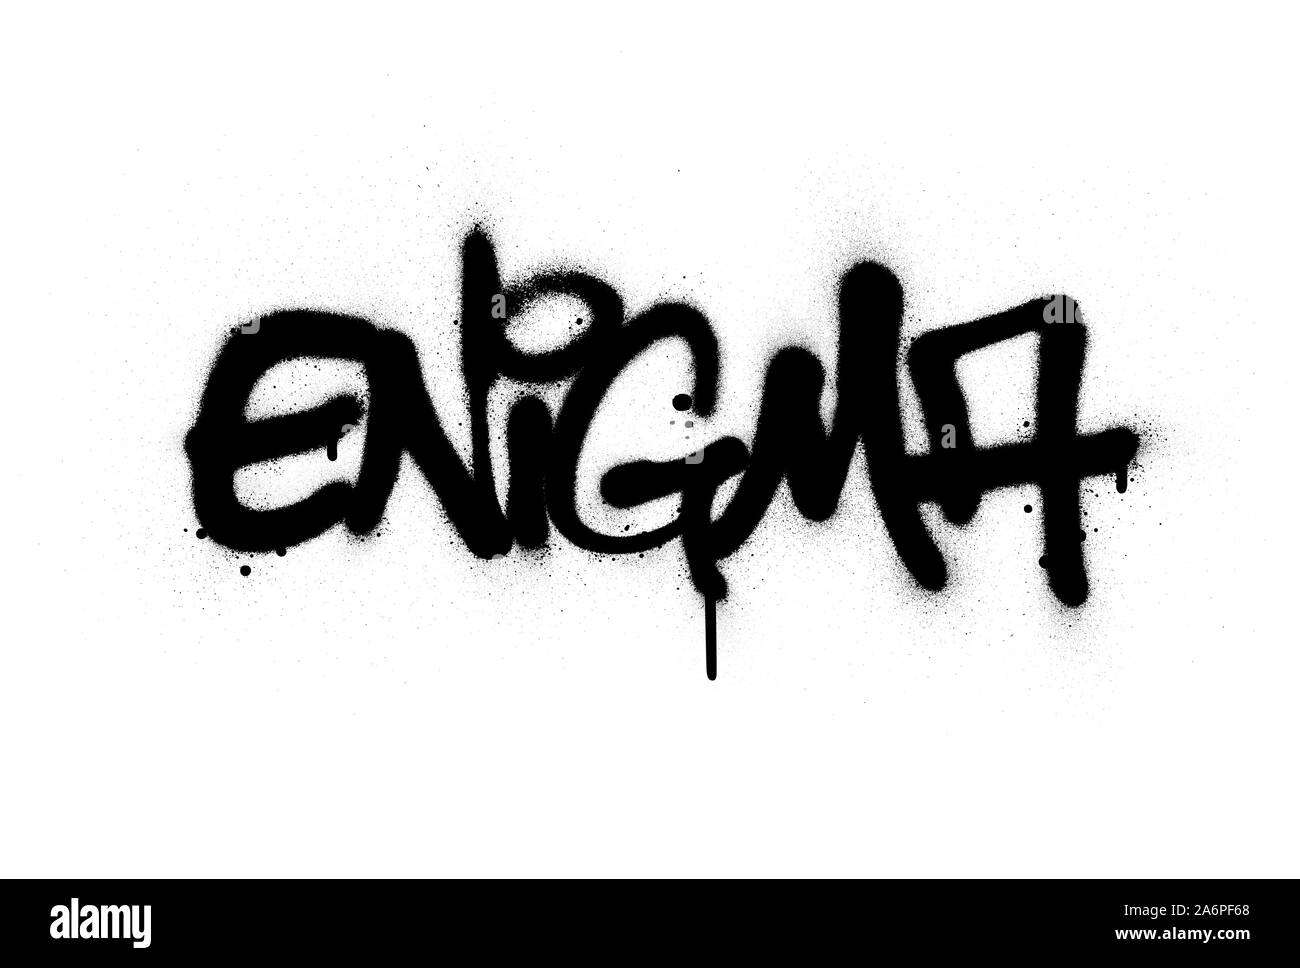 graffiti enigma word sprayed in black over white Stock Vector